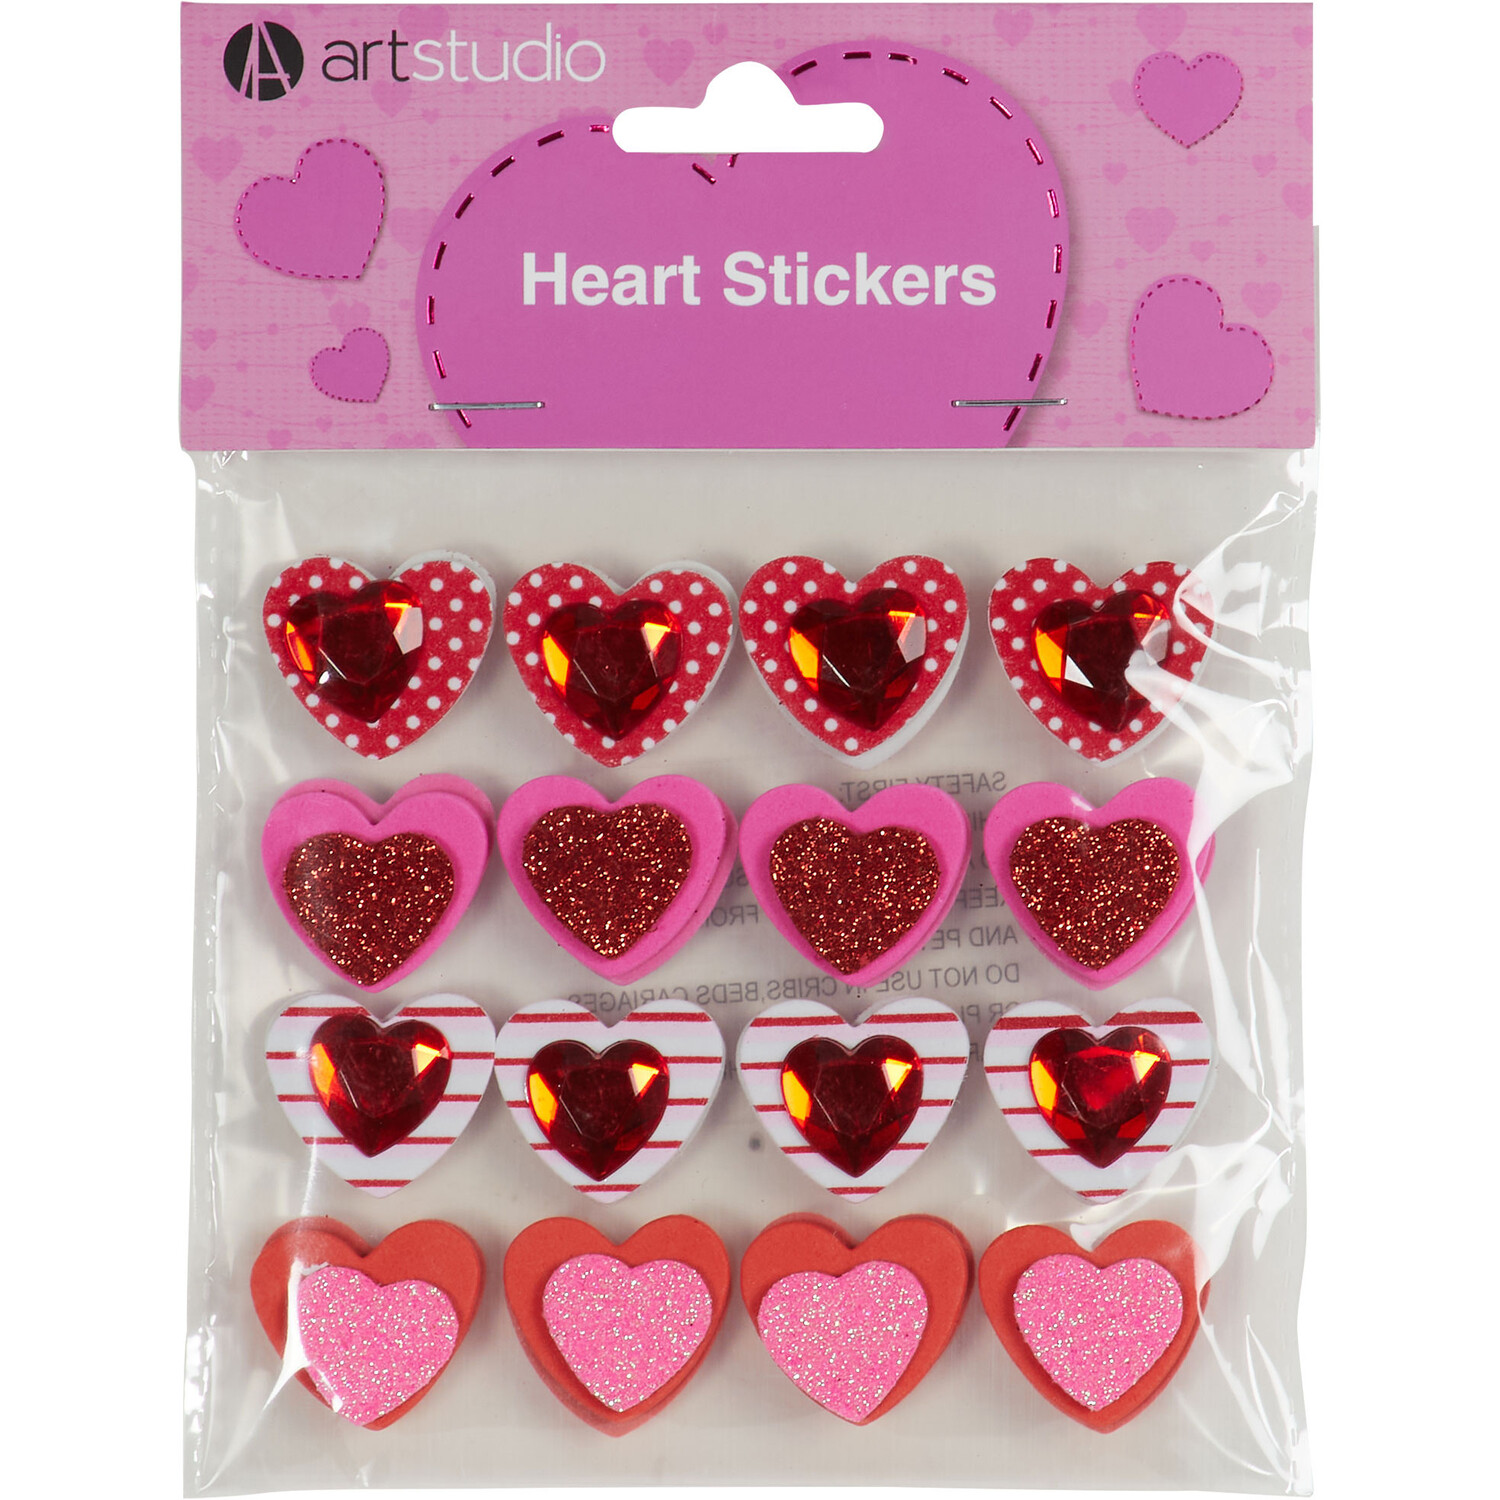 Art Studio Heart Stickers 16 Pack Image 1